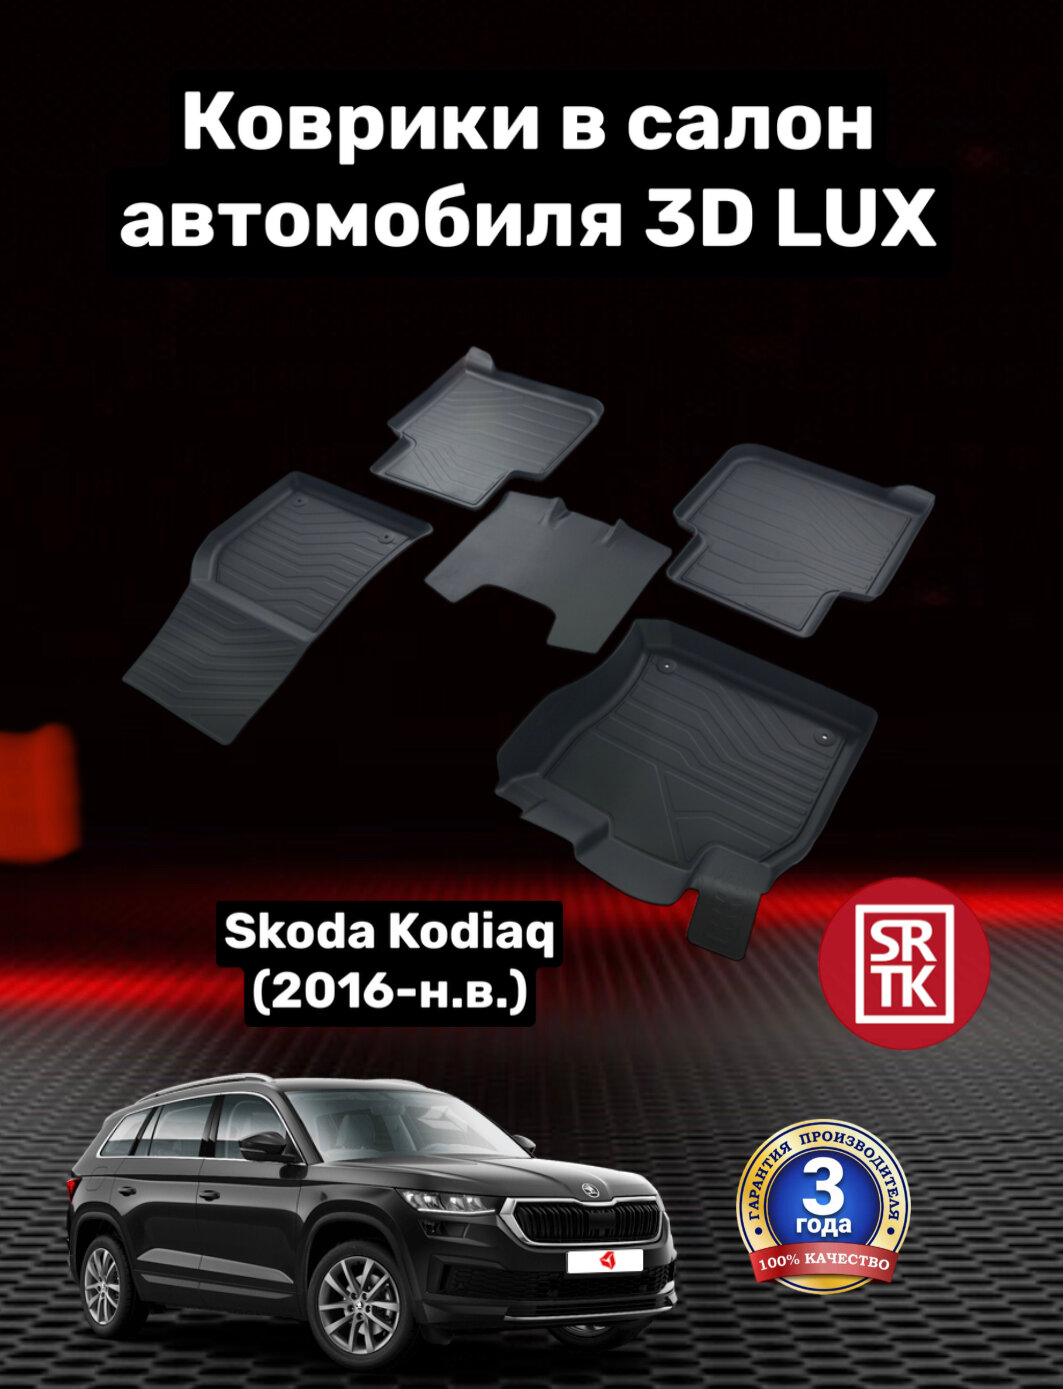 Коврики резиновые Шкода Кодиак (2016-)/Skoda Kodiaq (2016-) 3D LUX SRTK (Саранск) комплект в салон